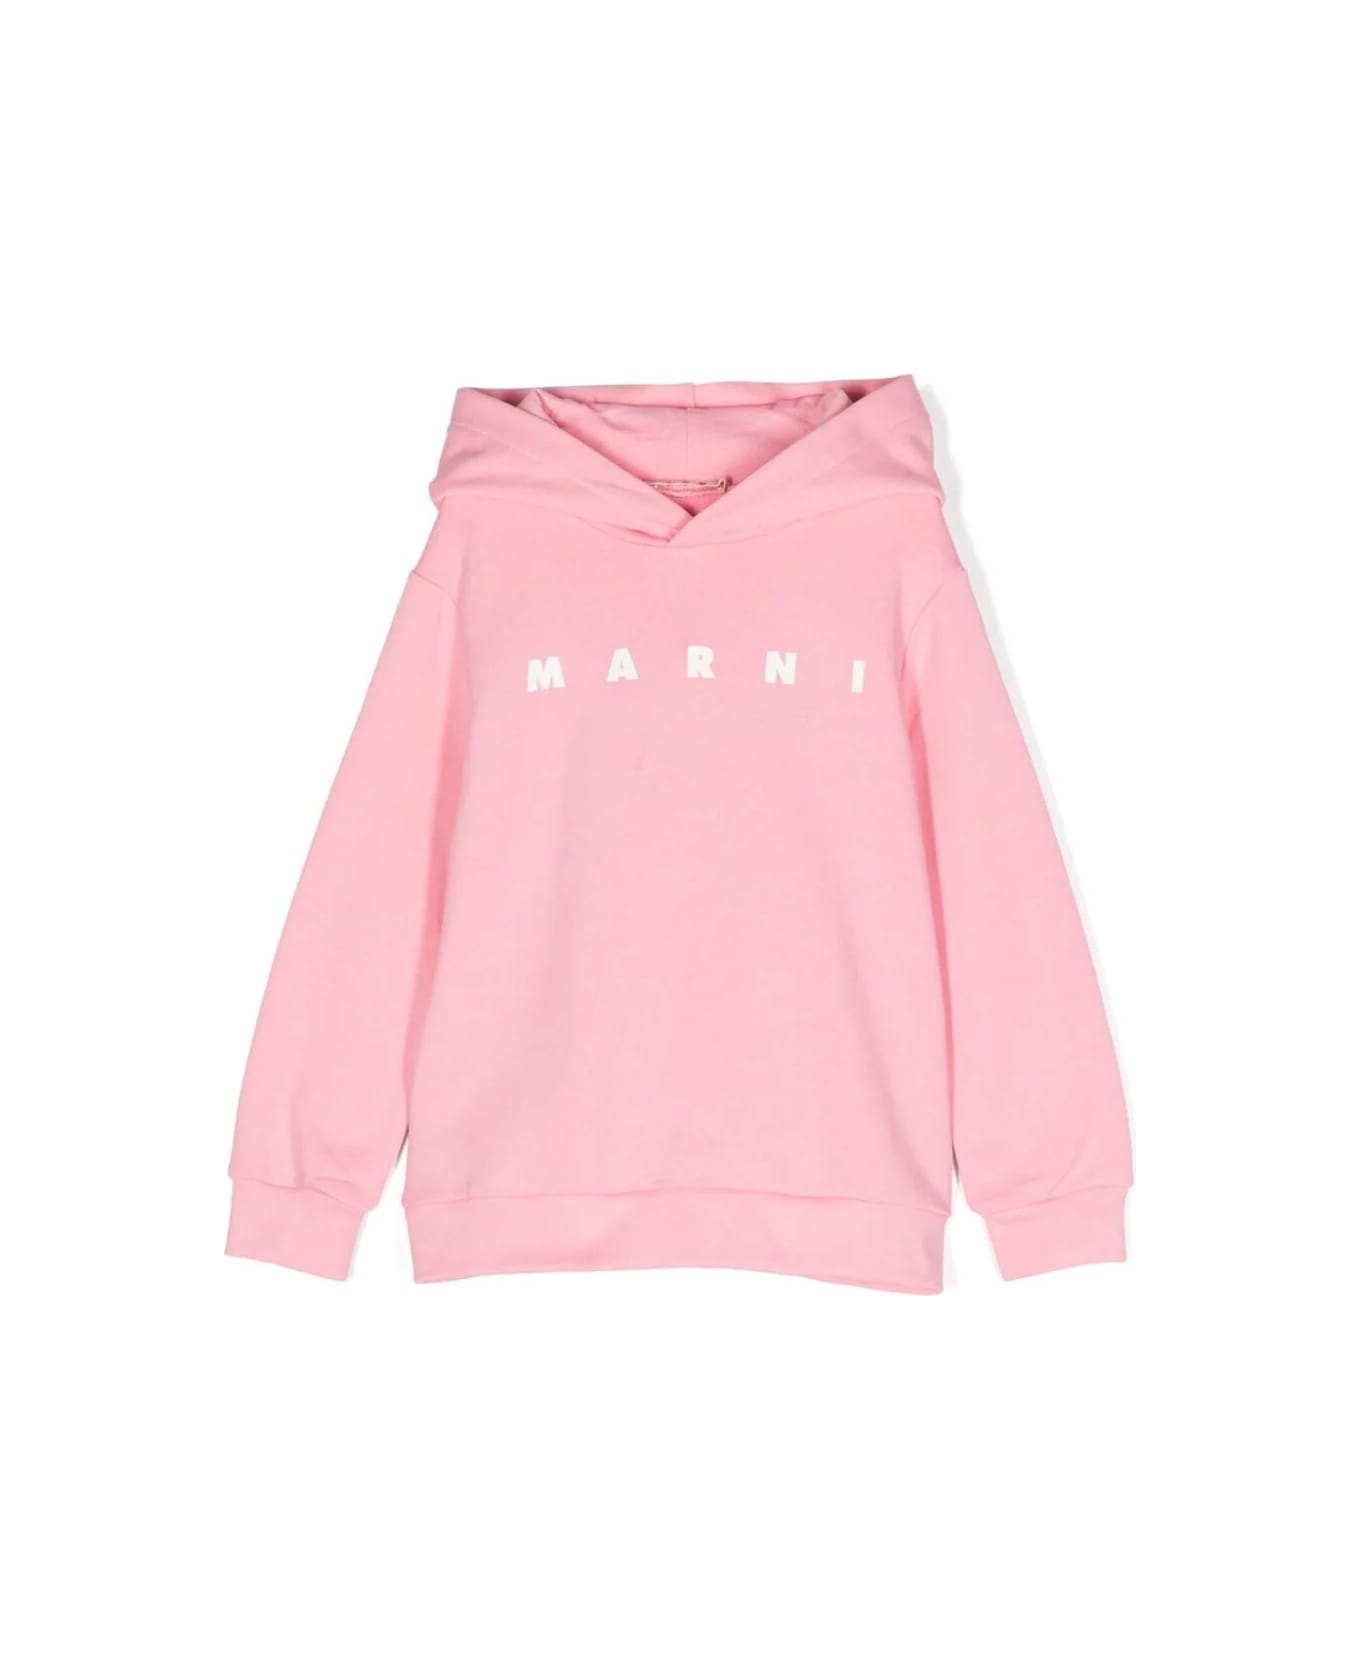 Marni Ms119u Sweatshirt - Pink